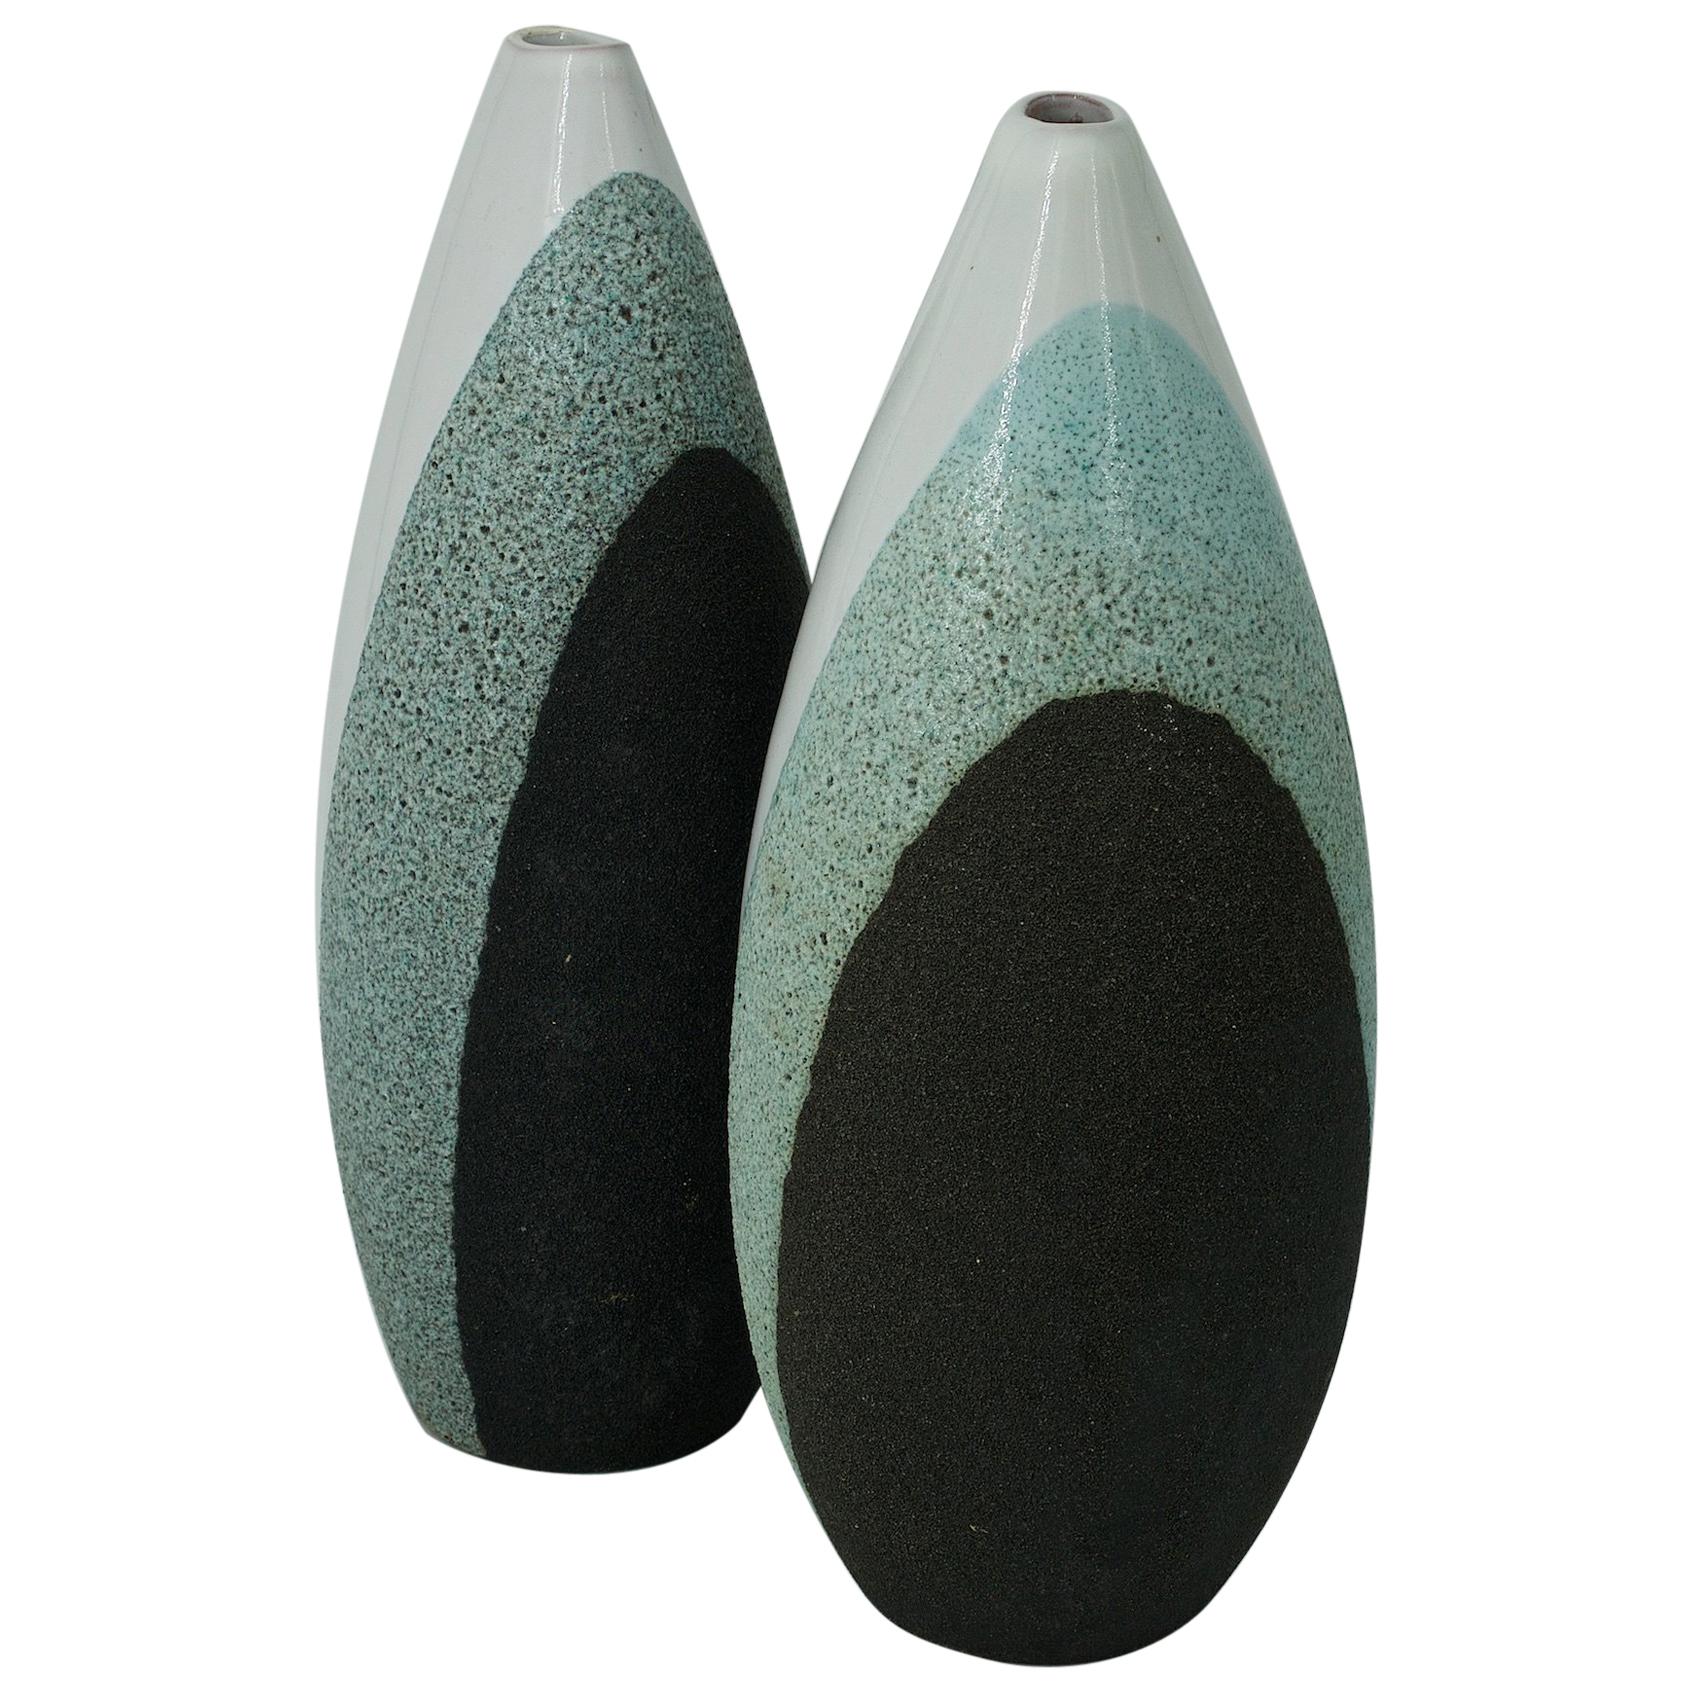 1970s Volcanic Glaze Pottery Vases by Ettore Sottsass Bitossi Raymor, Italy Pair